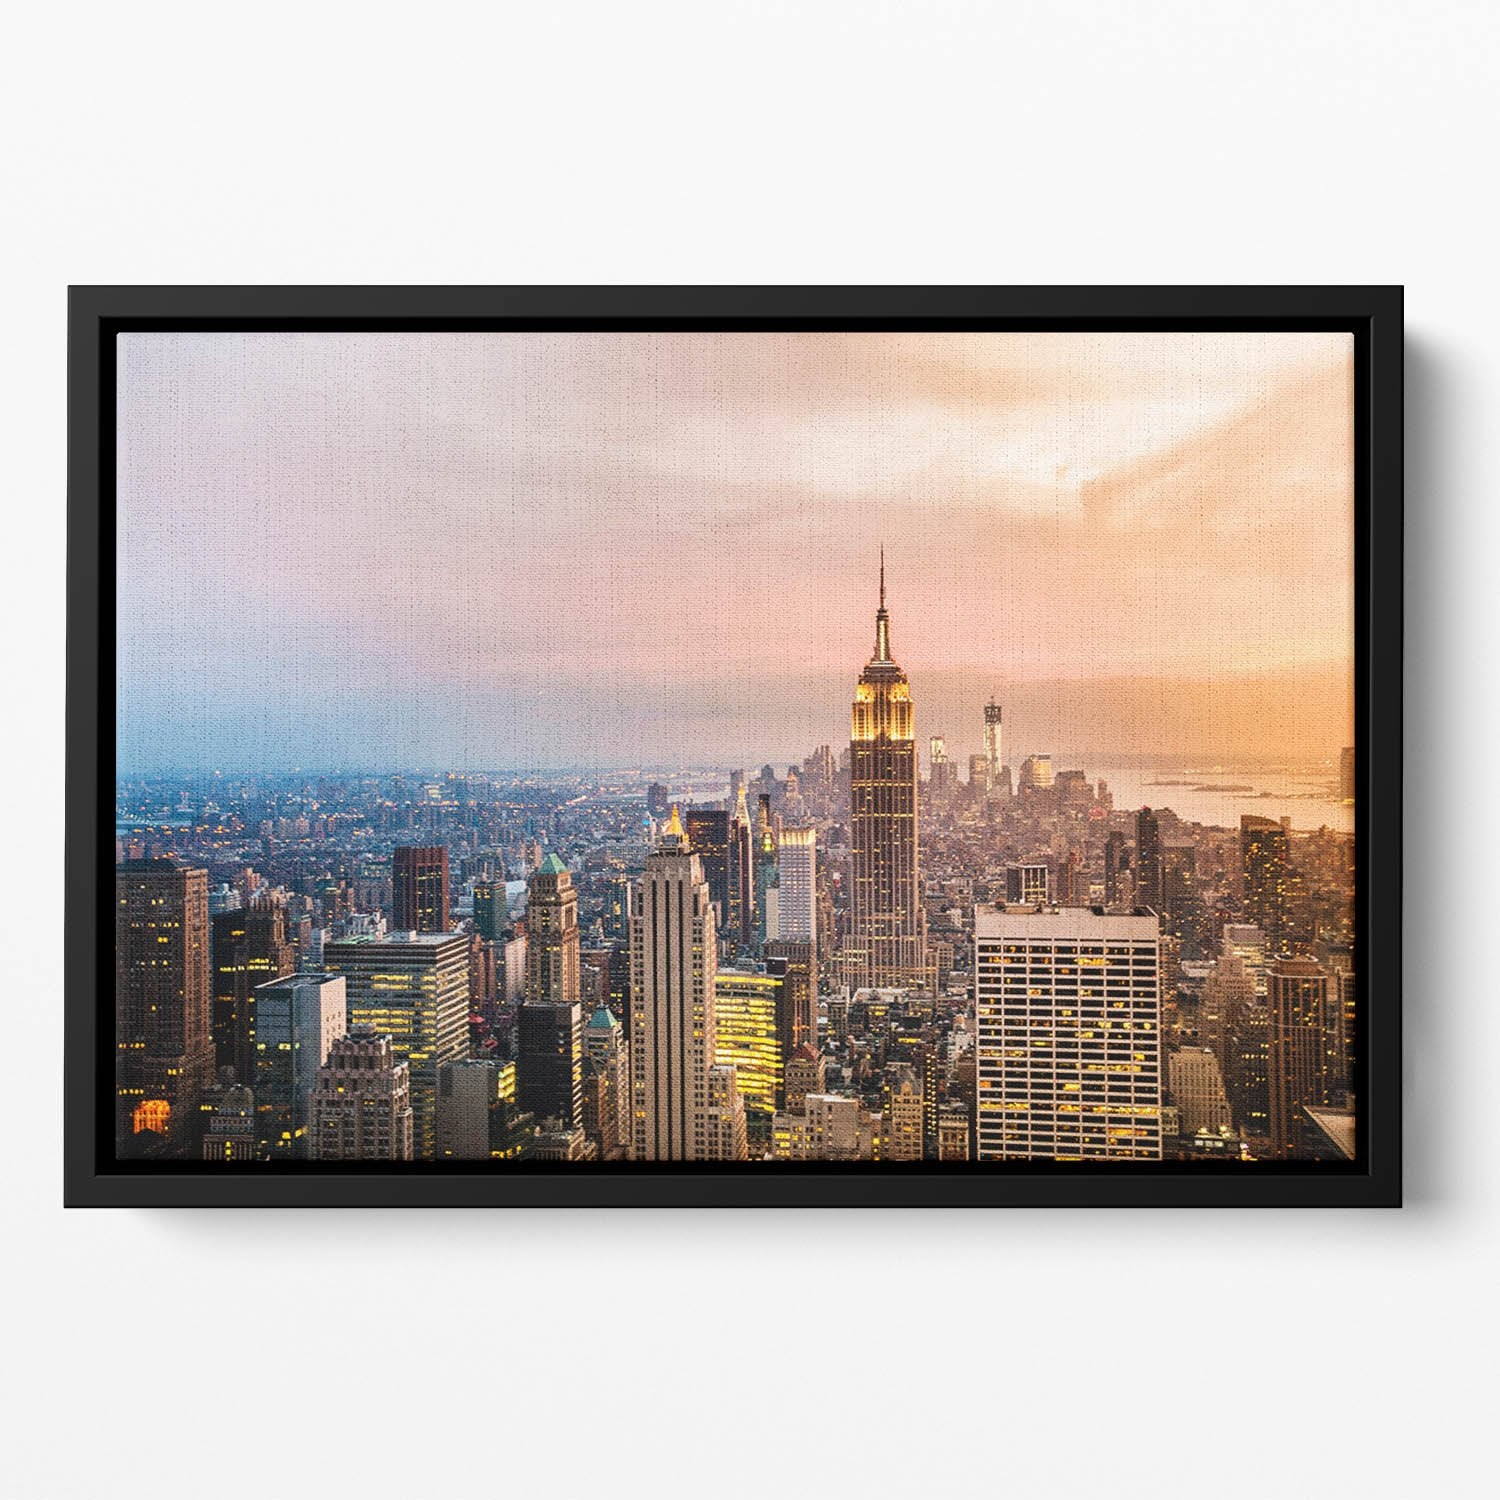 New York City skyline at sunset Floating Framed Canvas